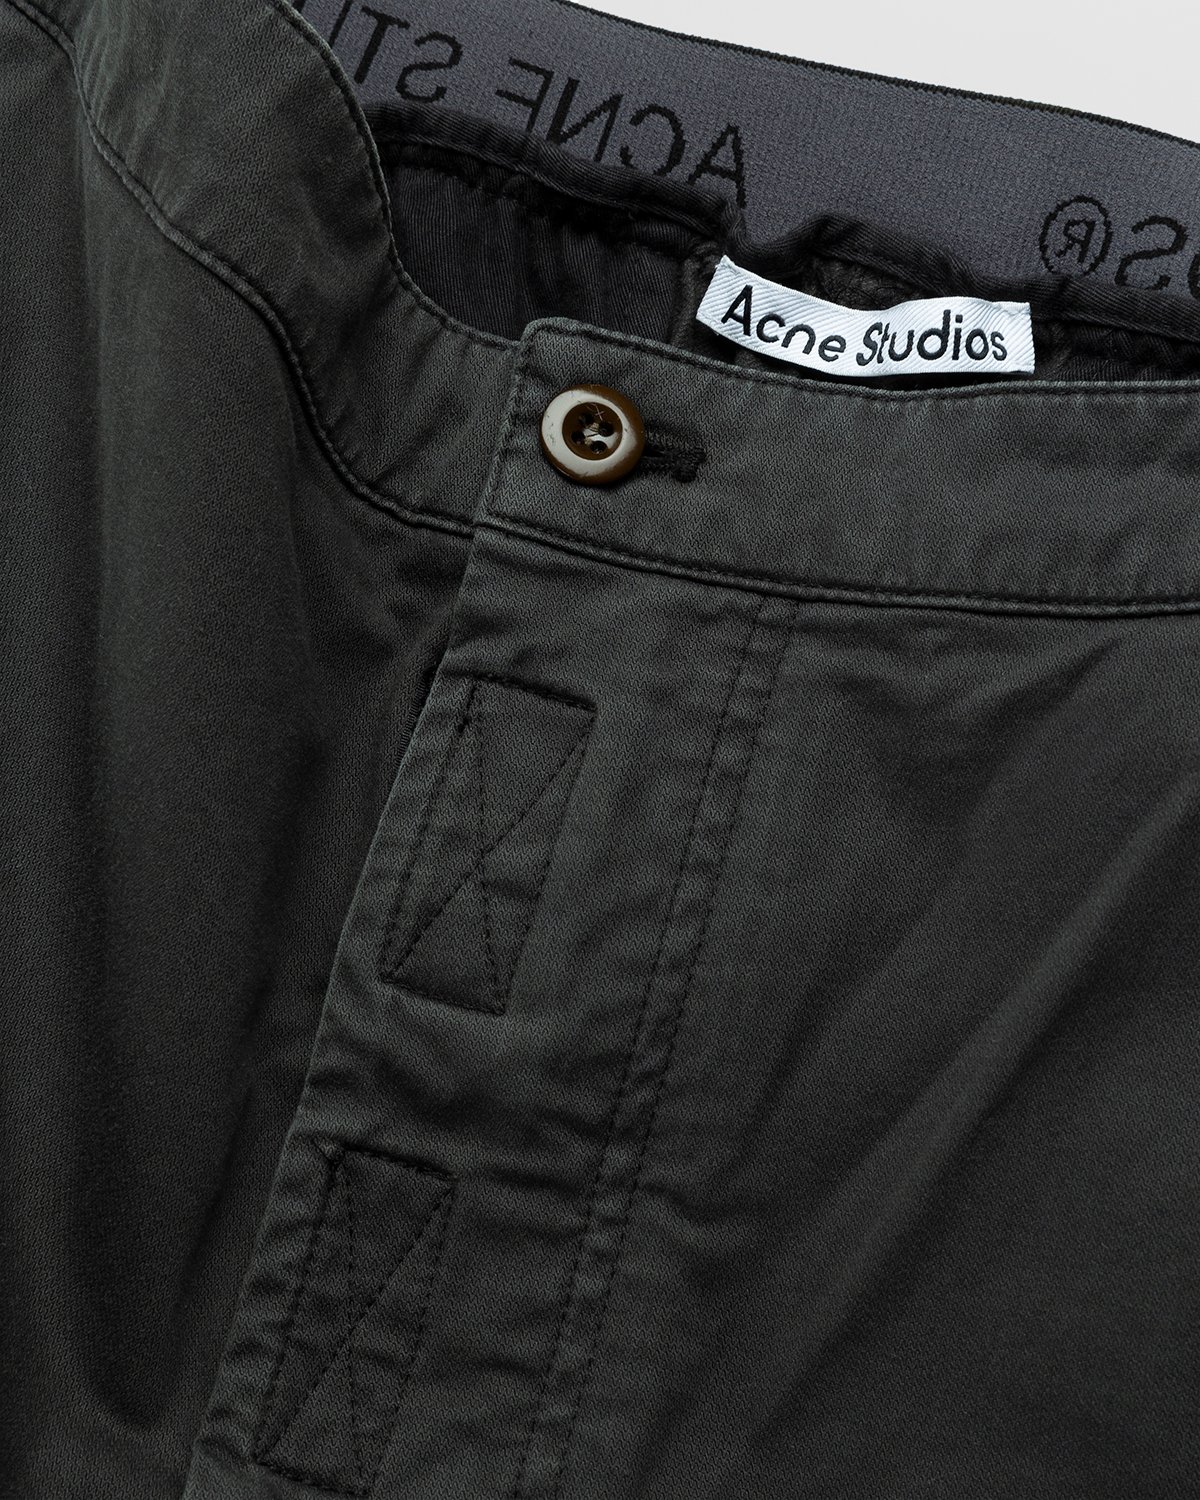 Acne Studios - Chevron Cargo Pants Anthracite Grey - Clothing - Grey - Image 6